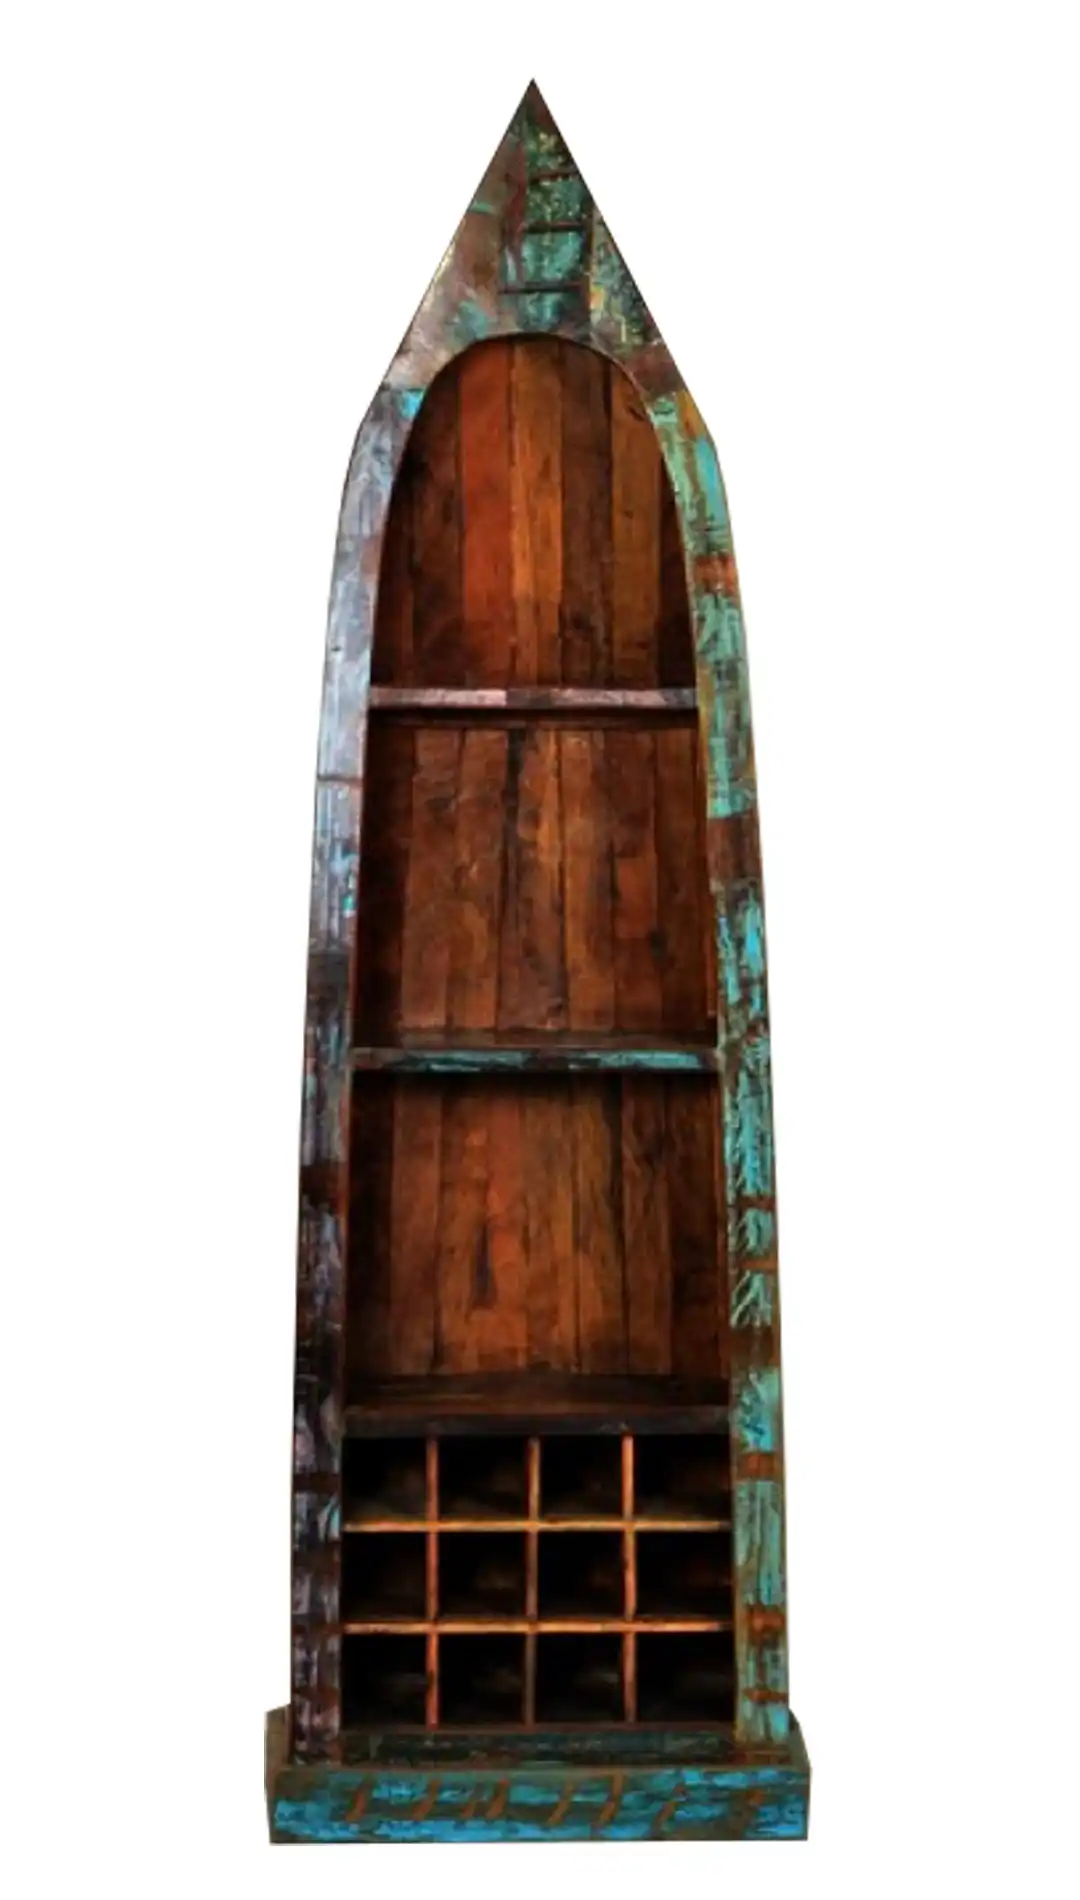 Reclaimed Wooden Boat Book Self with Bottle Holder - popular handicrafts